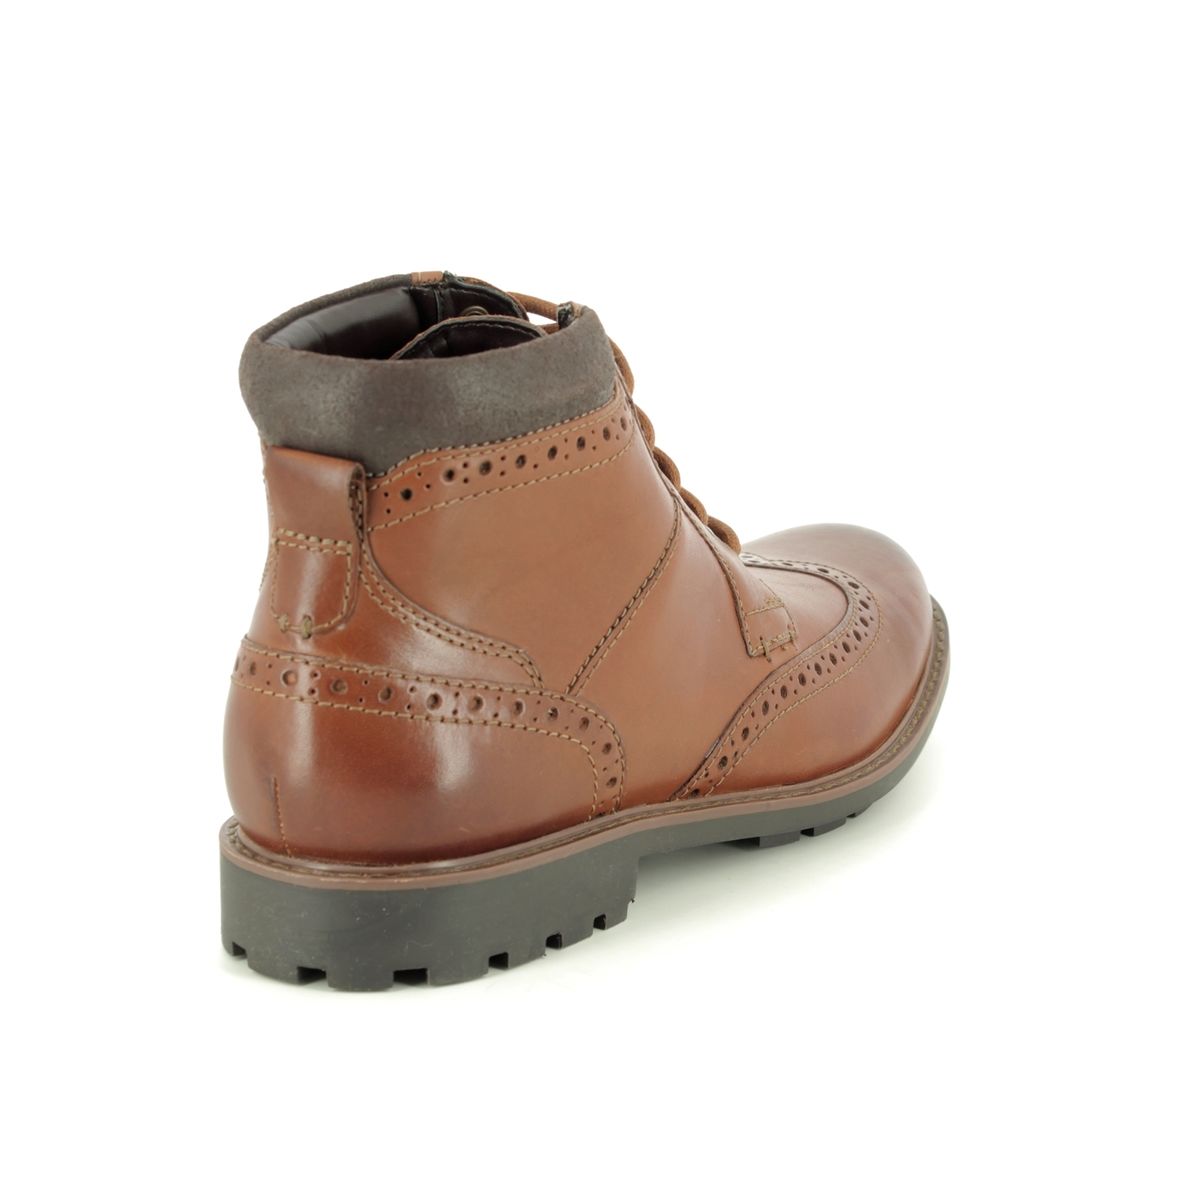 clarks men's curington high leather boots